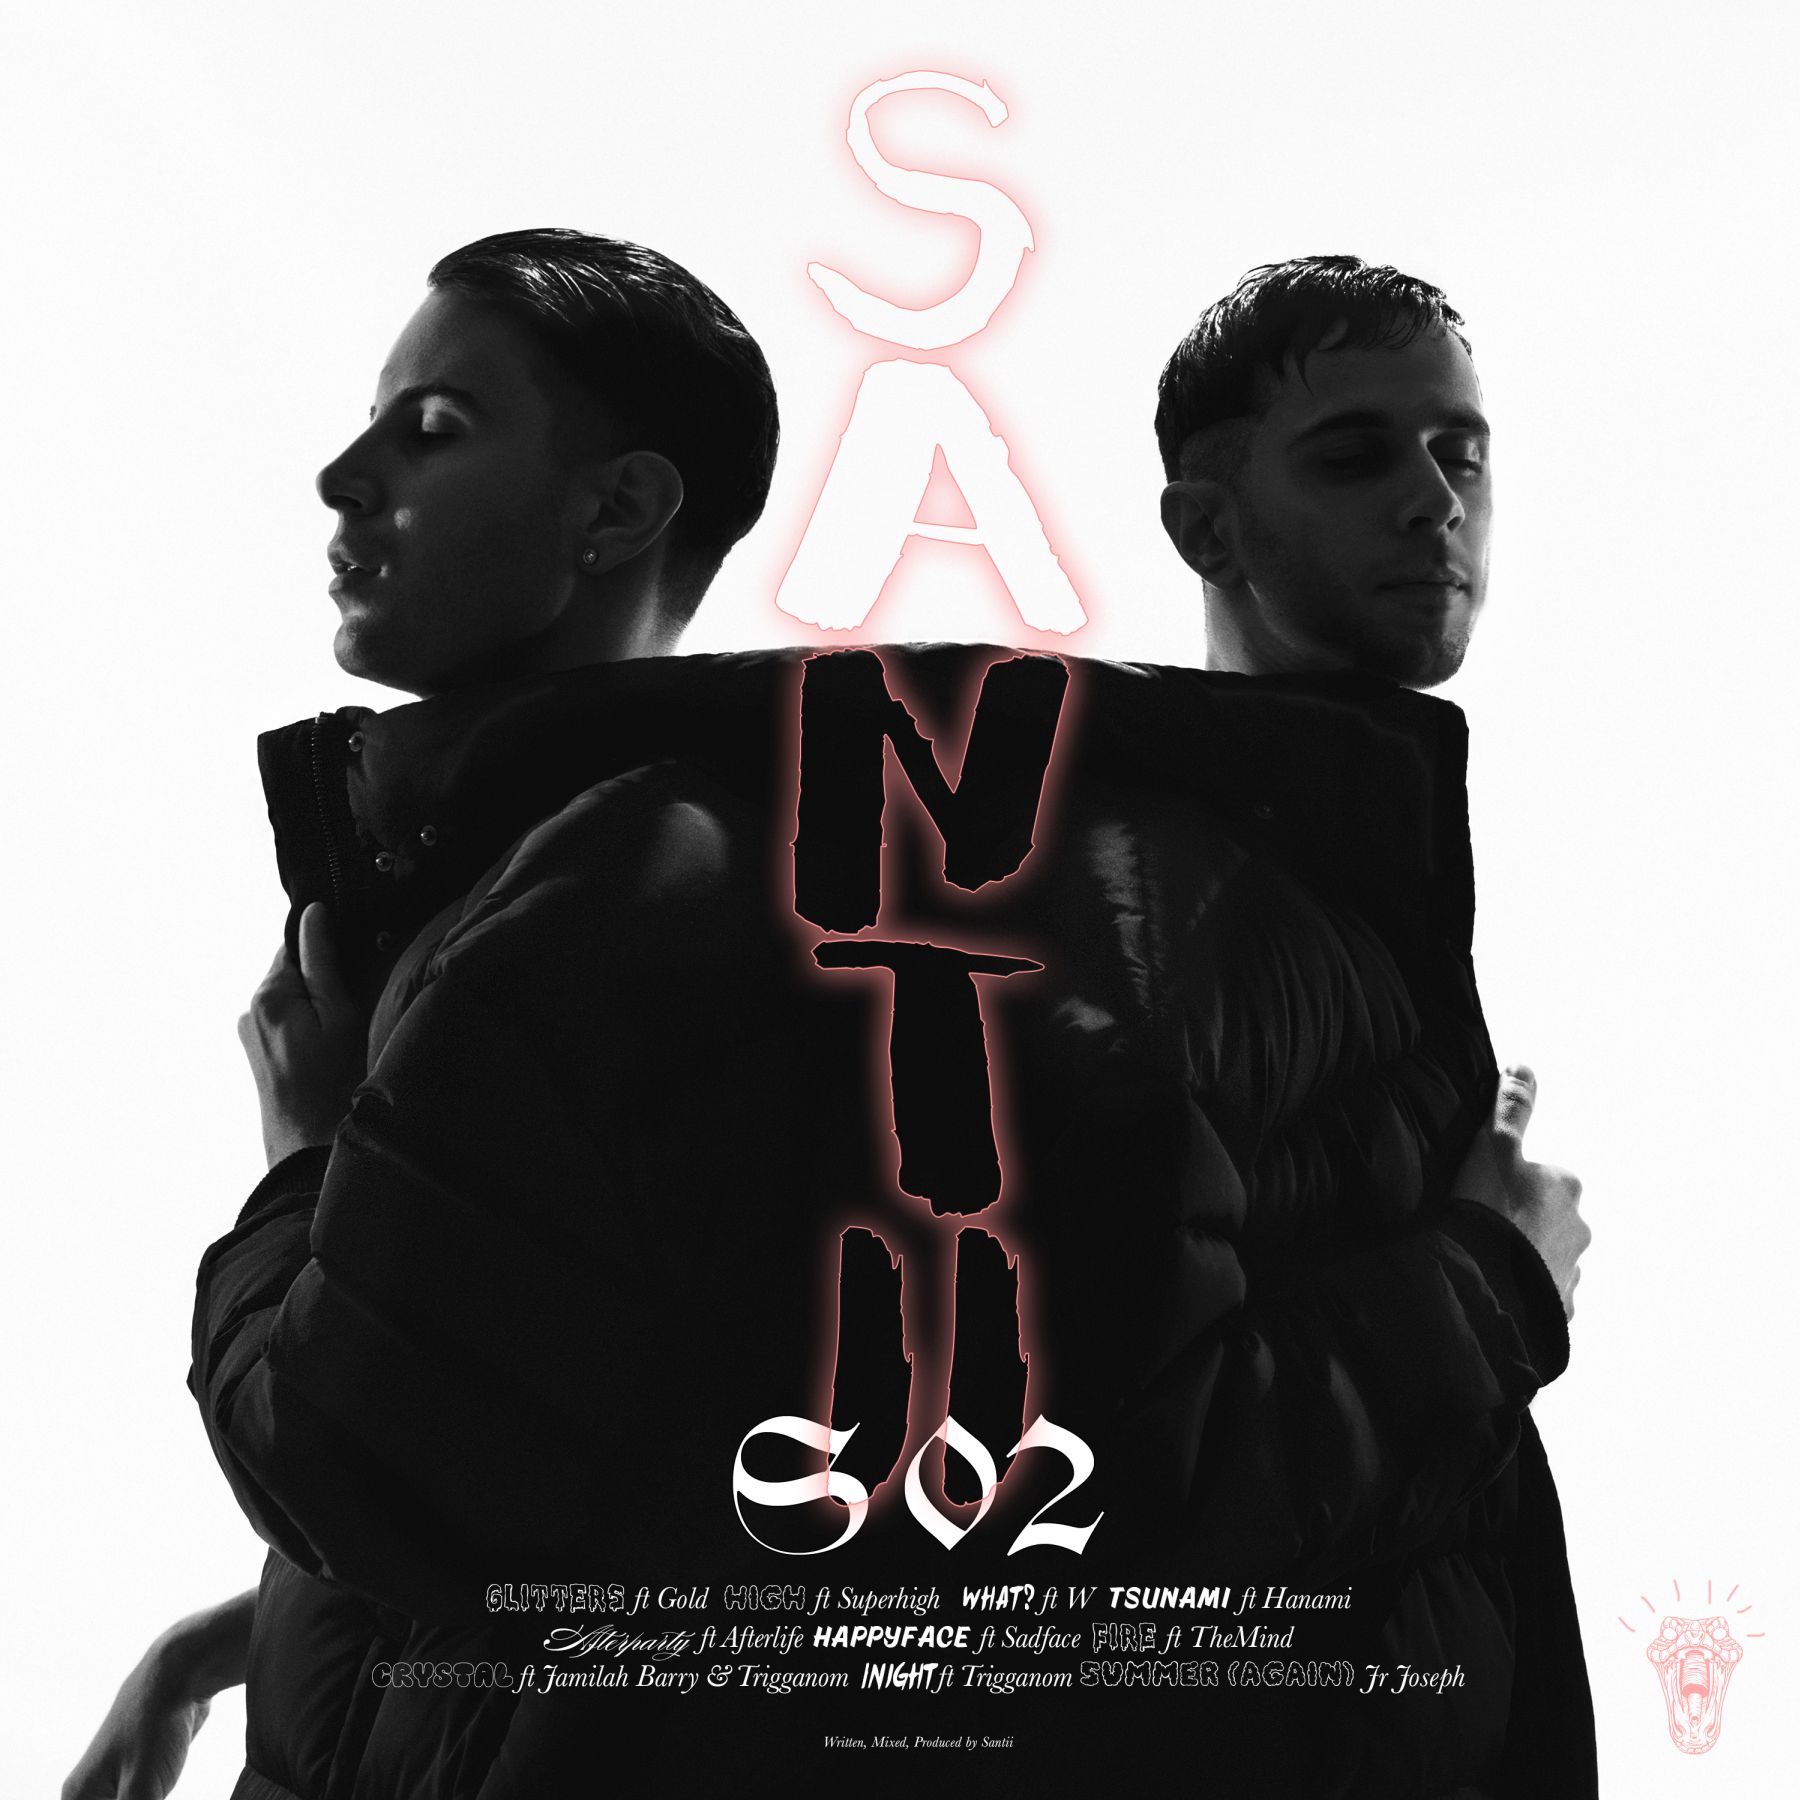 Nuovo album Santii: uscita, tracklist, autori